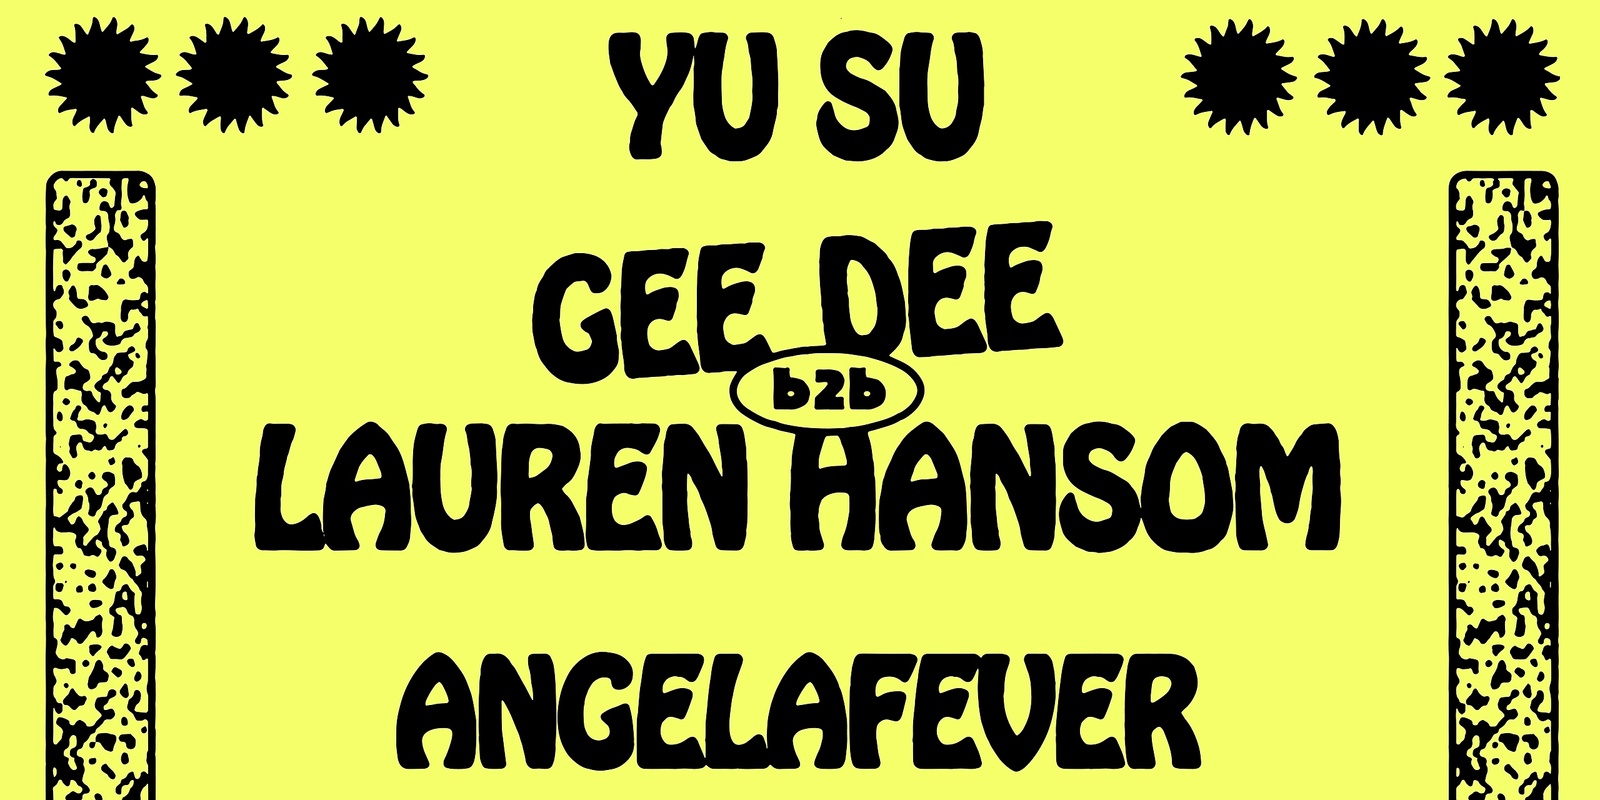 Banner image for A Love Supreme & Crown Ruler Pres. Yu Su, Lauren Hansom b2b Gee Dee